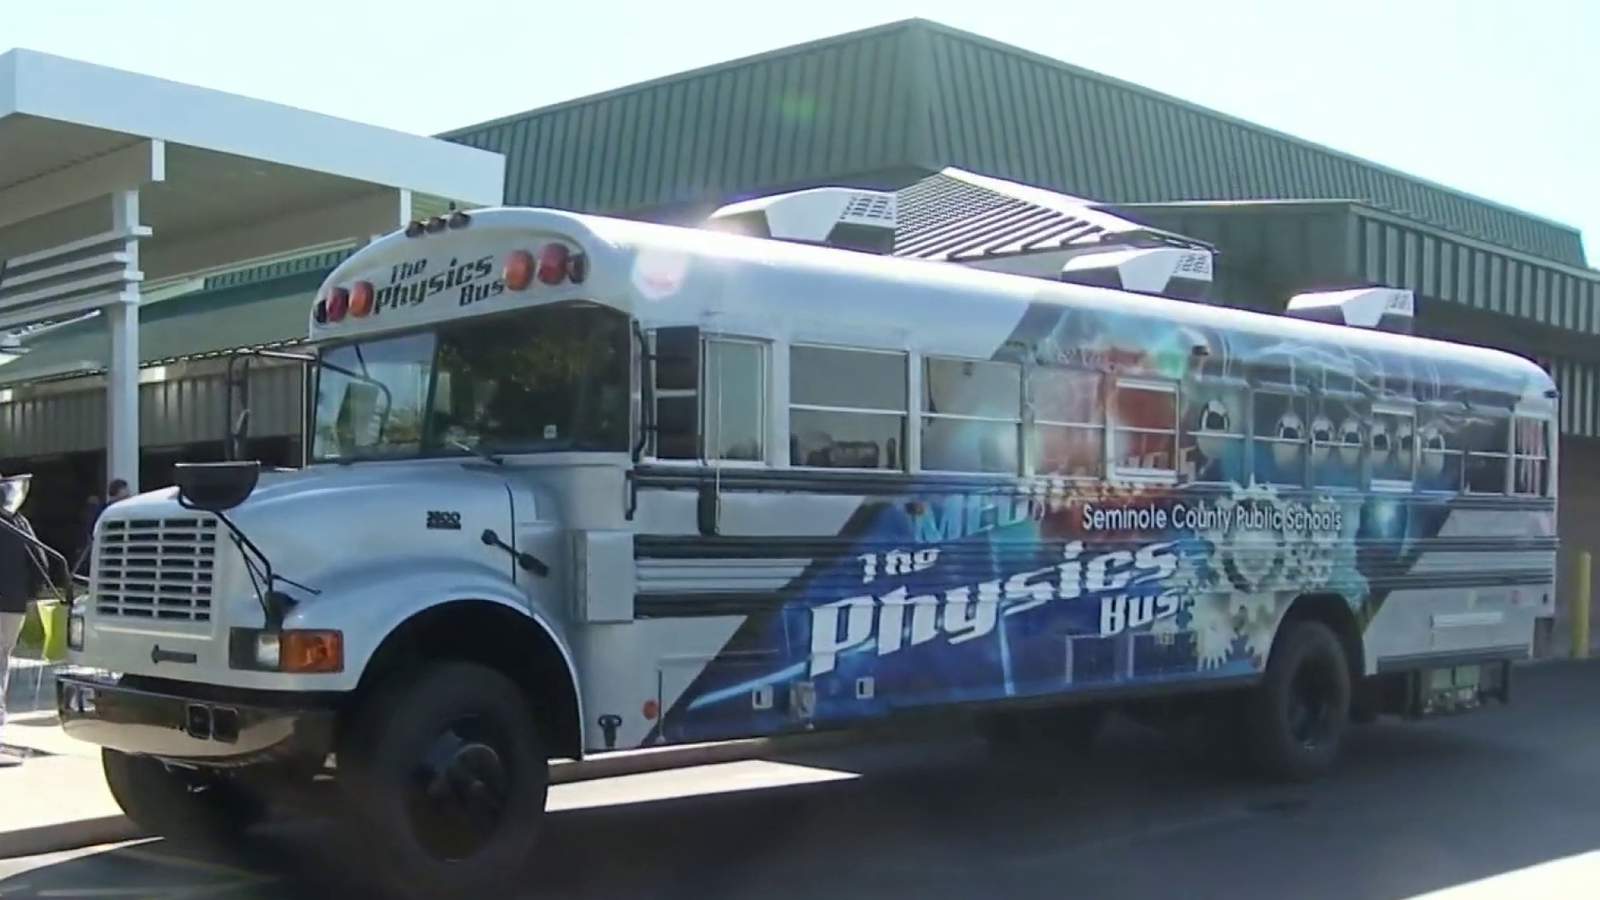 Seminole County Schools Physics bus drives students toward STEM careers